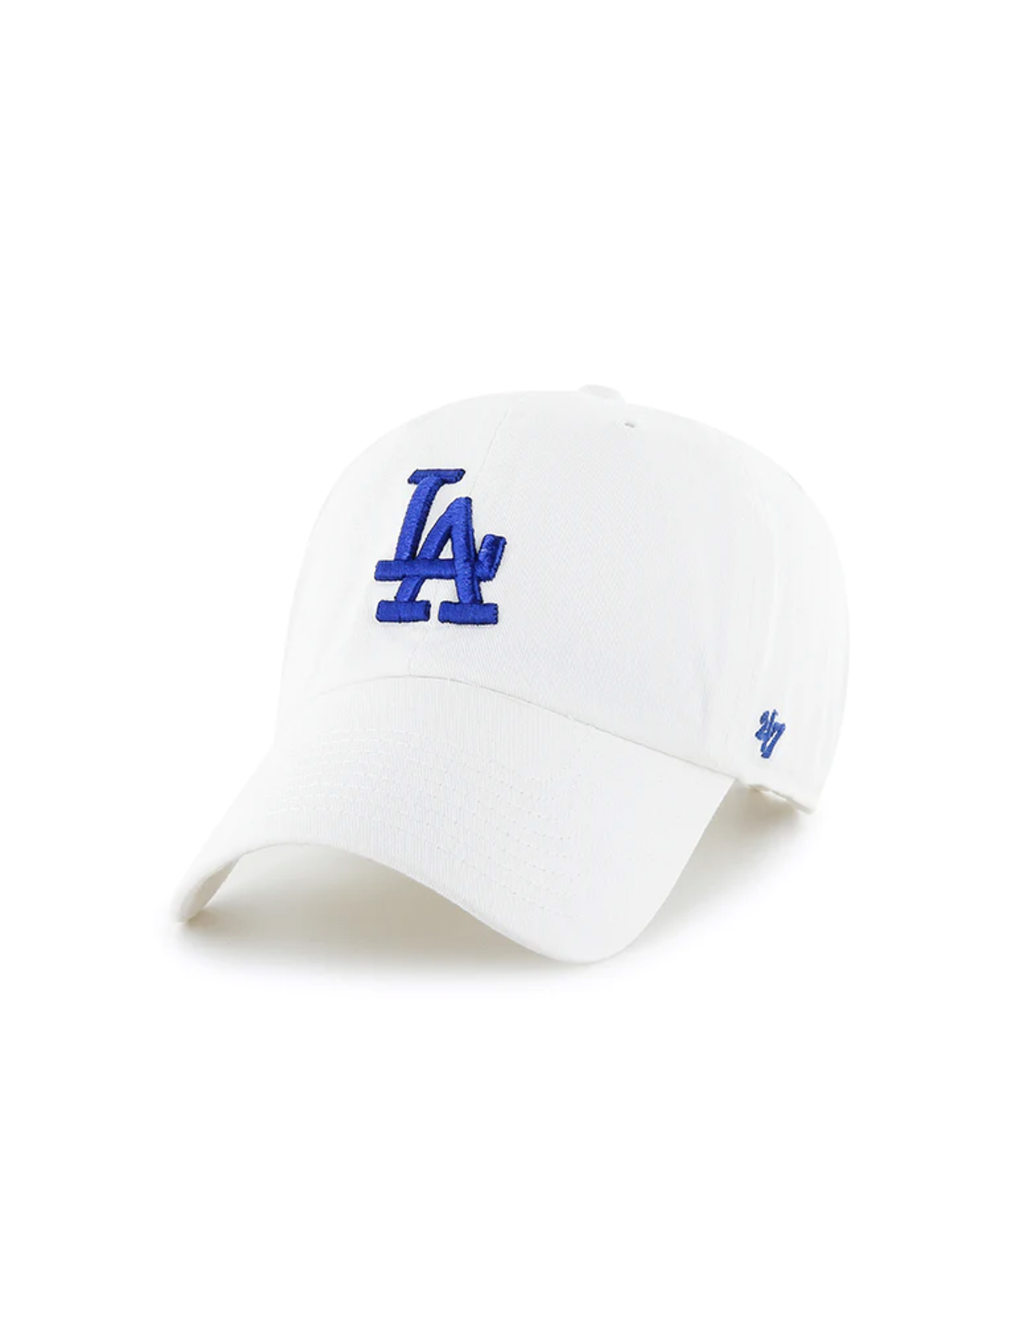 LA Dodgers Basic Ball Cap, White/Royal Blue